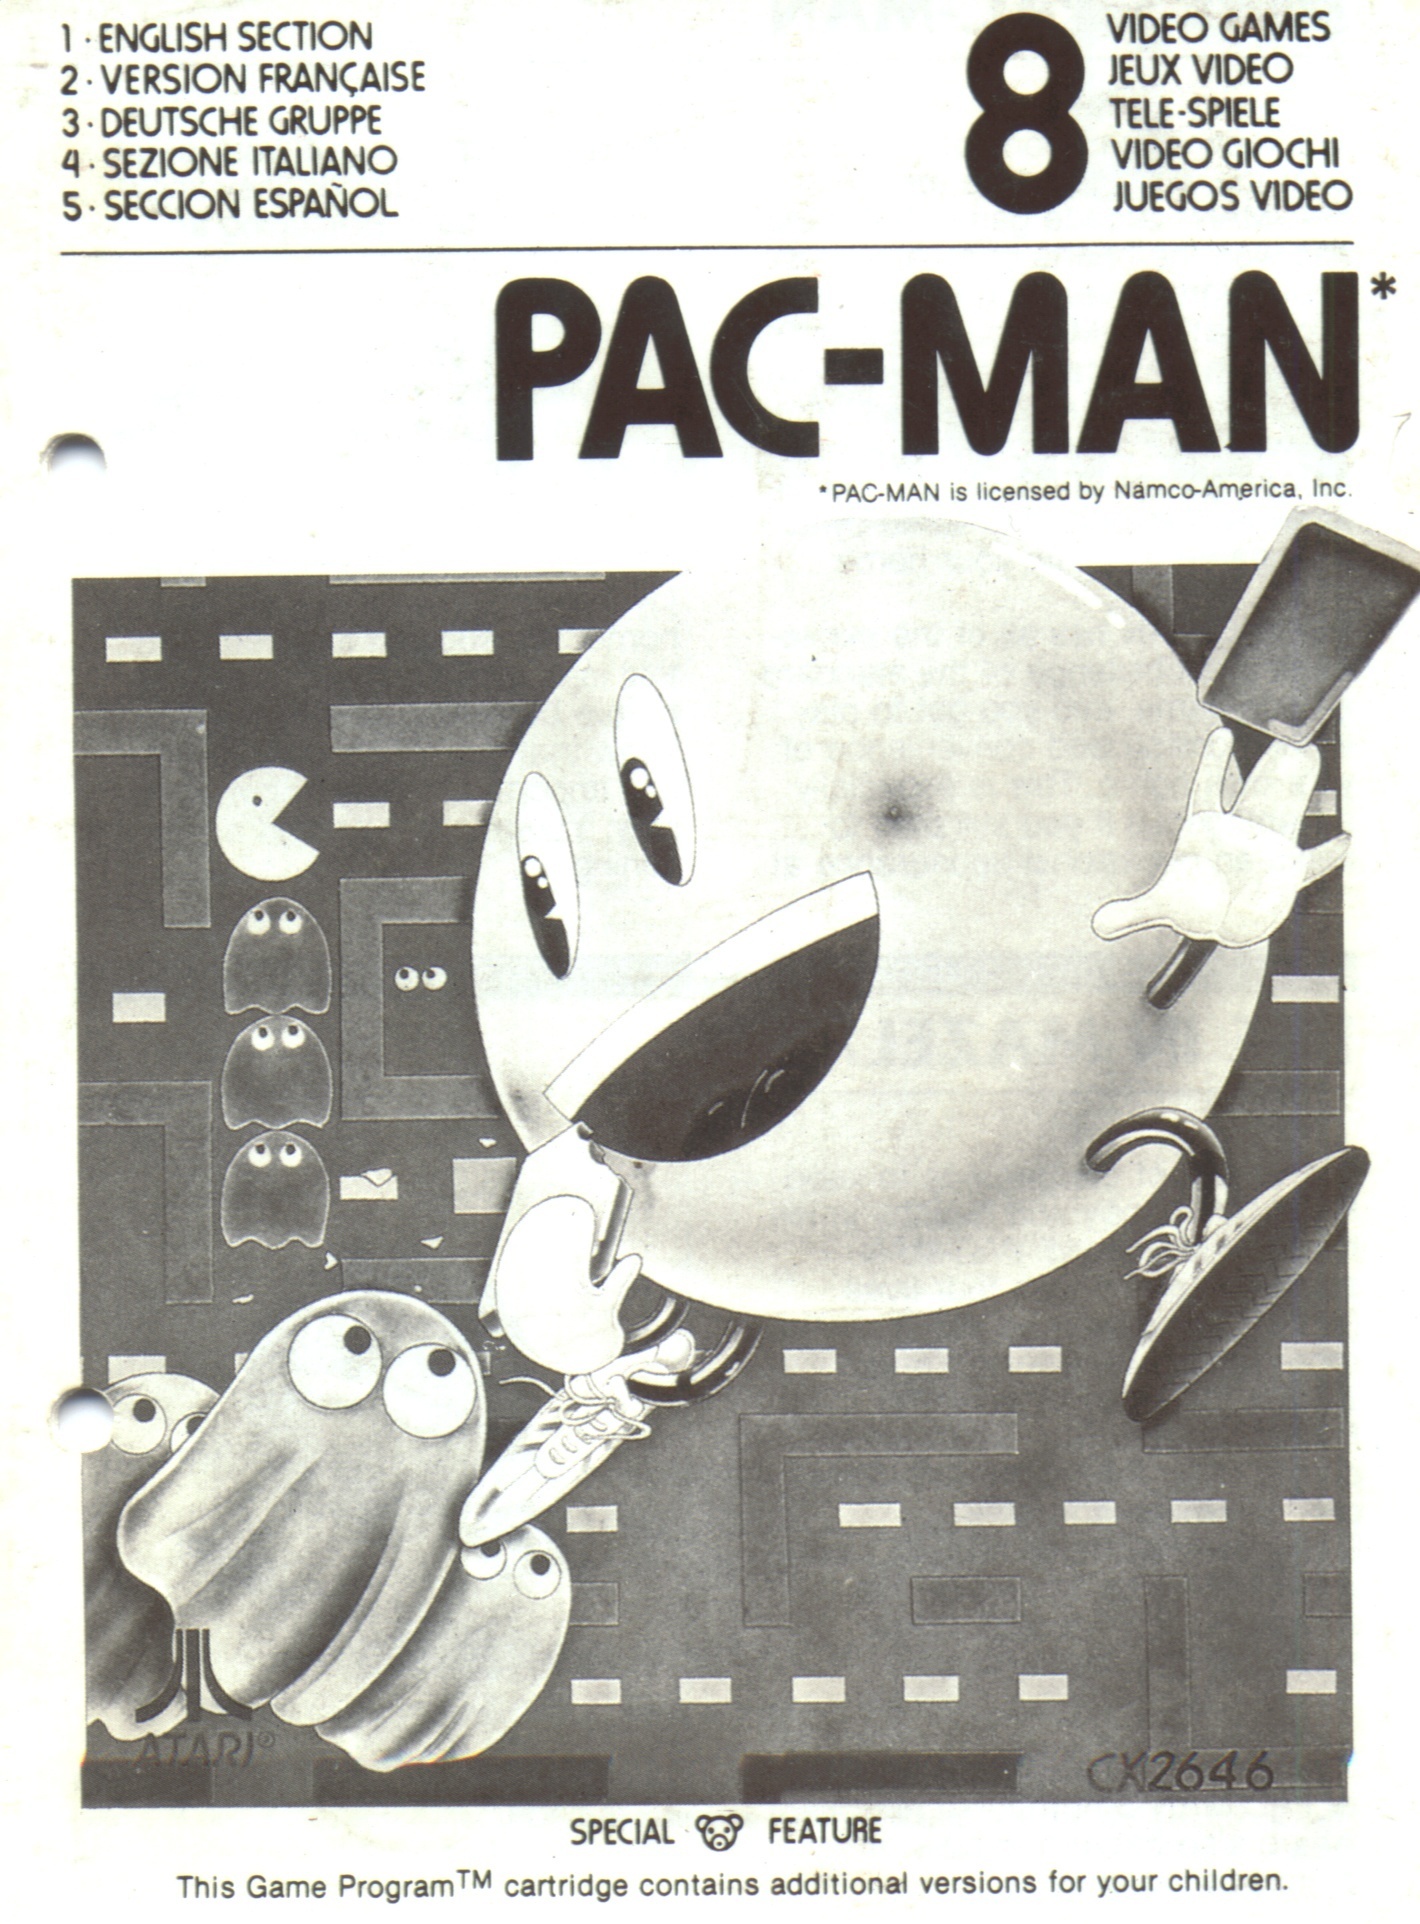 Source Pacman videogame manual